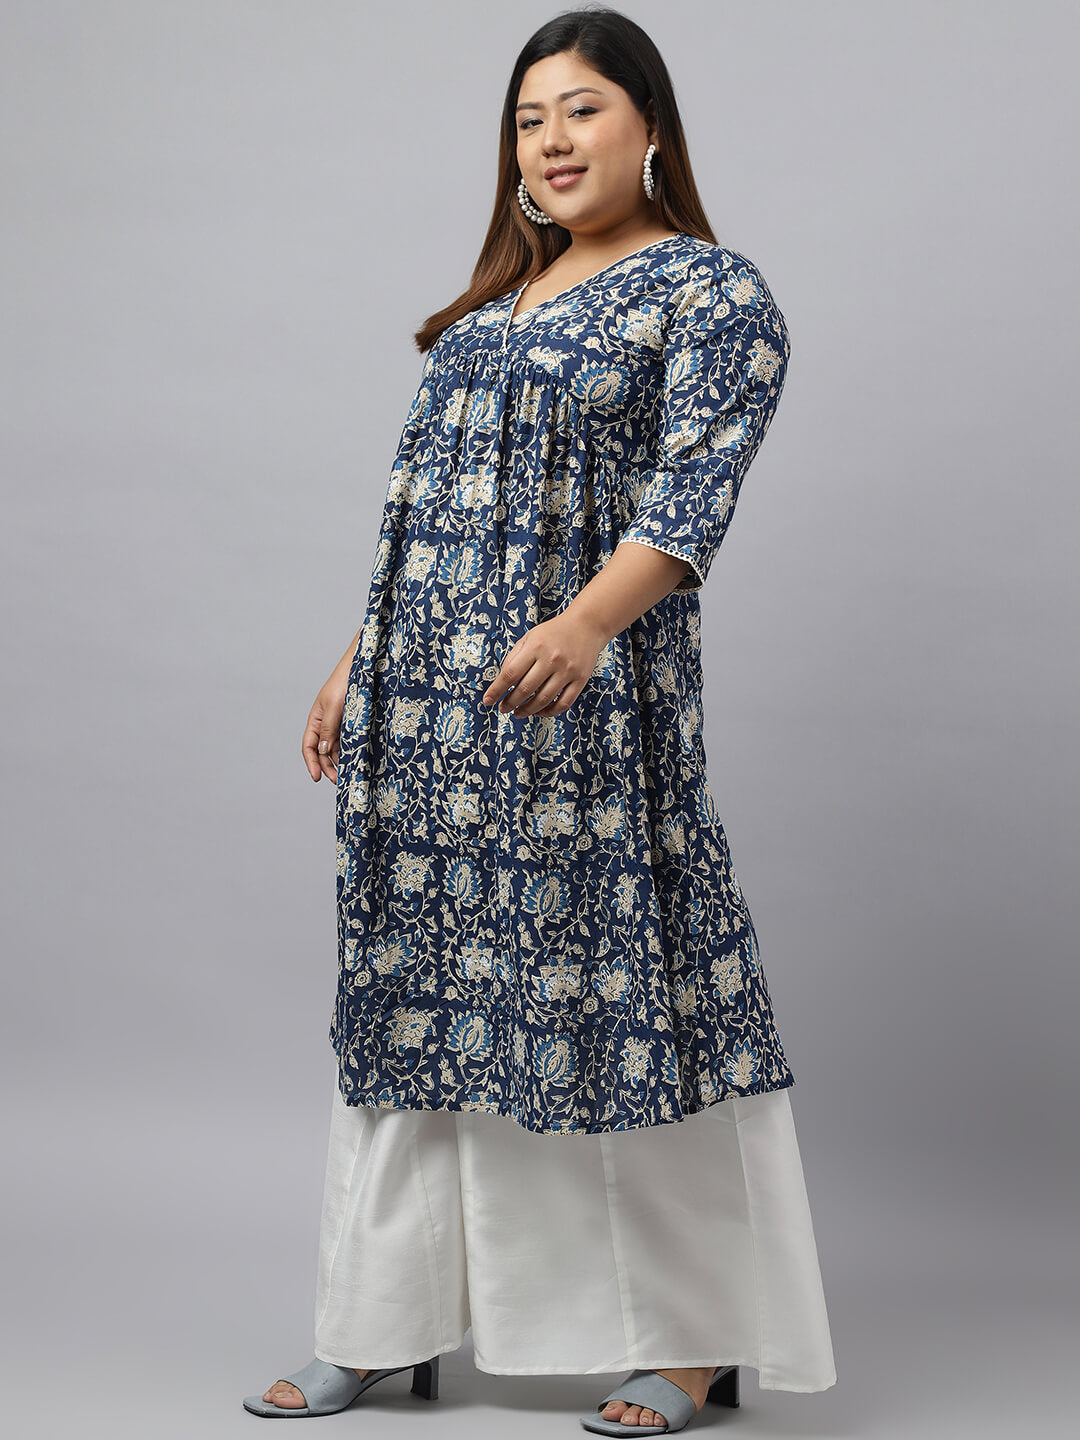 XL LOVE by Janasya Women's Plus Size Navy Blue Cotton Floral Printed Flared kurta